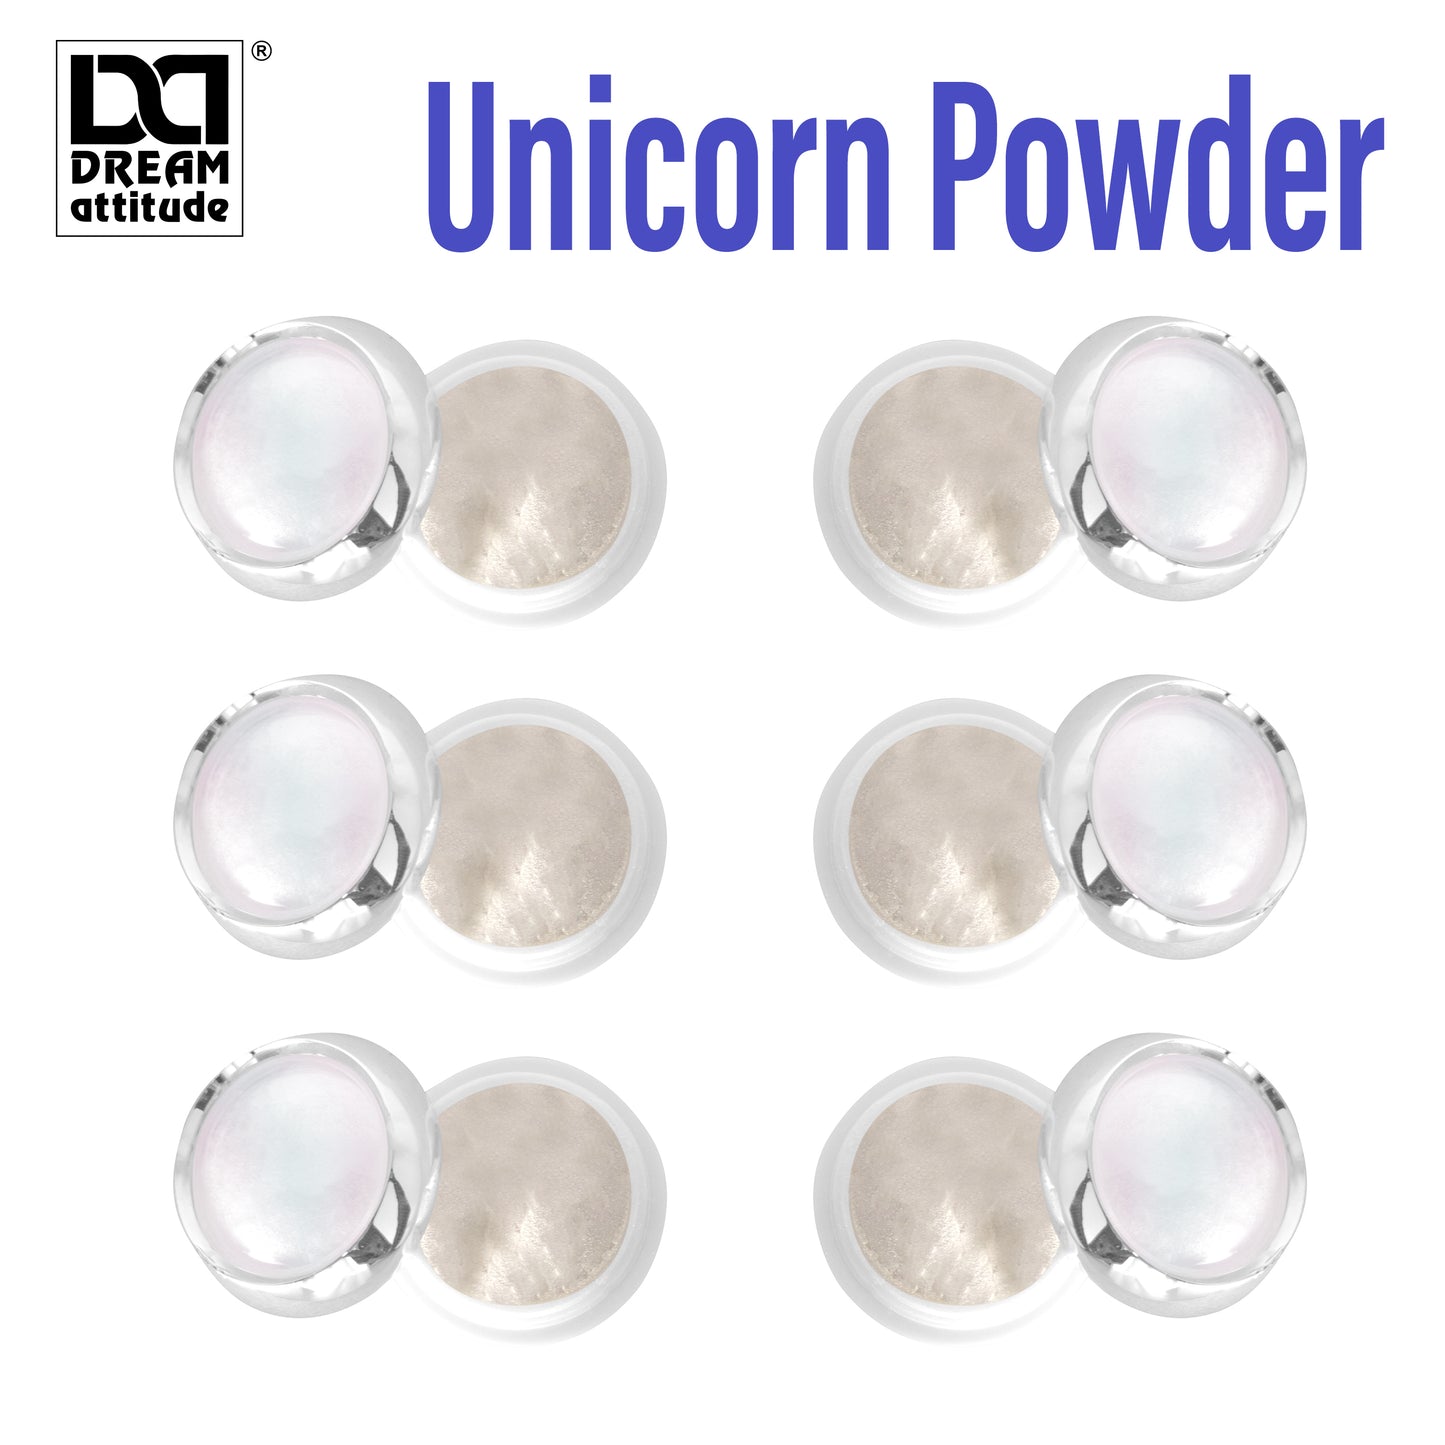 Dream Attitude Unicorn Powder: Enchant Your Nails with Magical Unicorn Shine